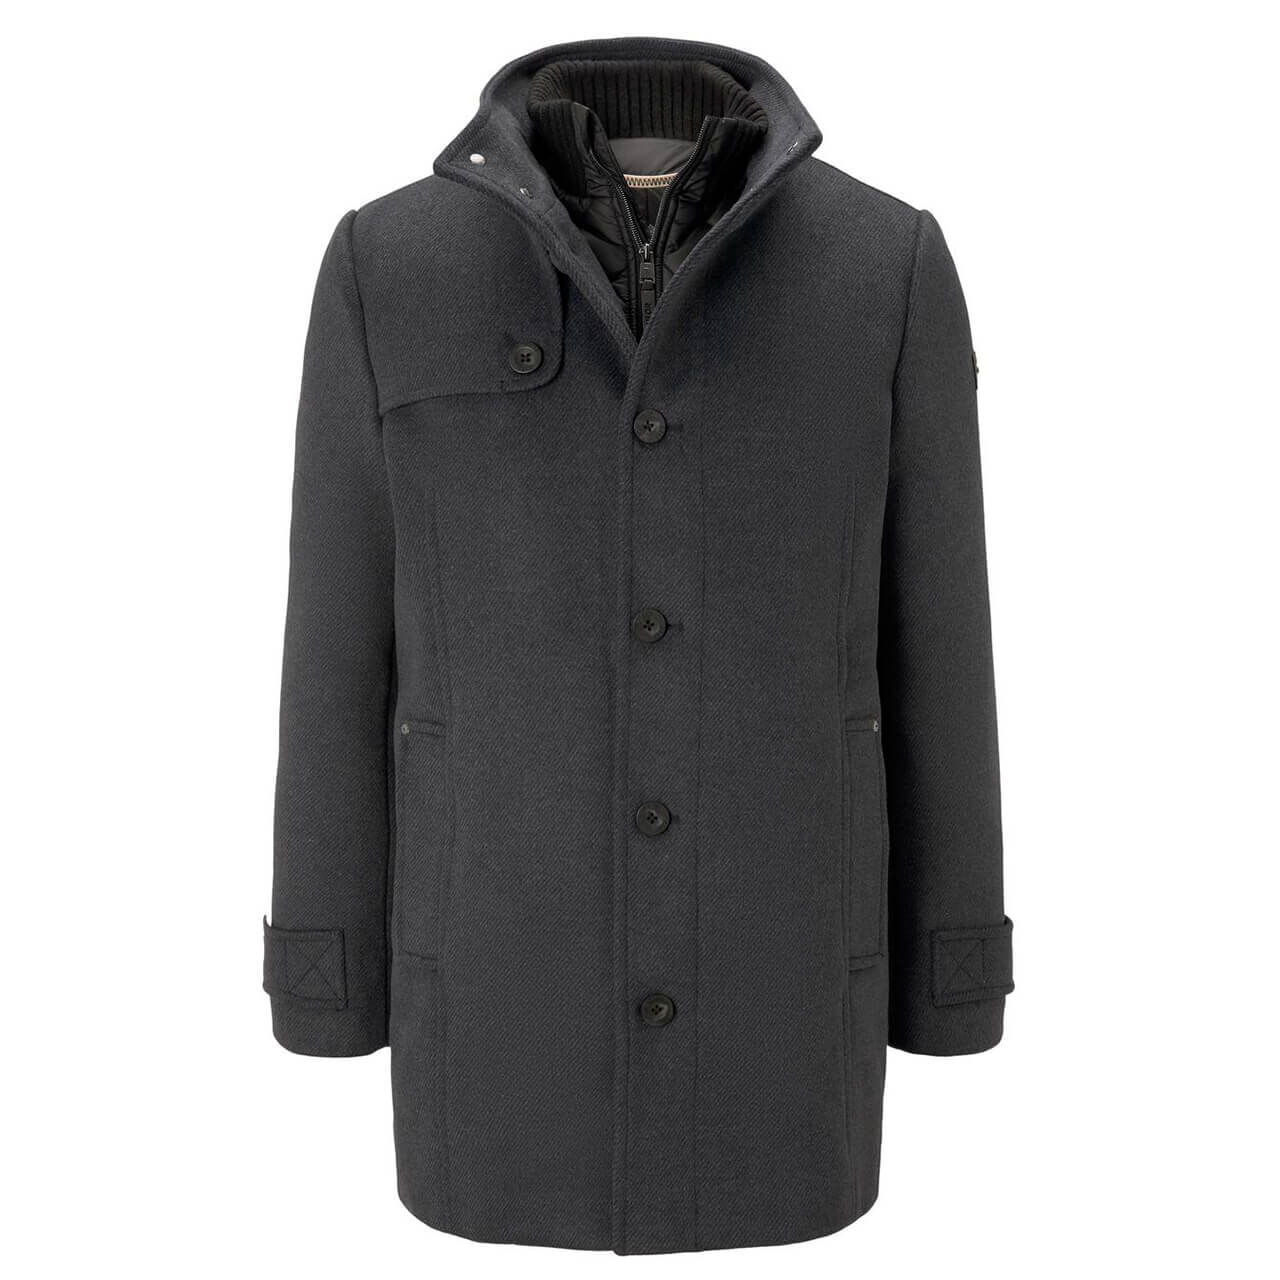 Tom Tailor Wool Coat 2 in 1 Mantel für Herren in Dunkelblau, FarbNr.: 24253